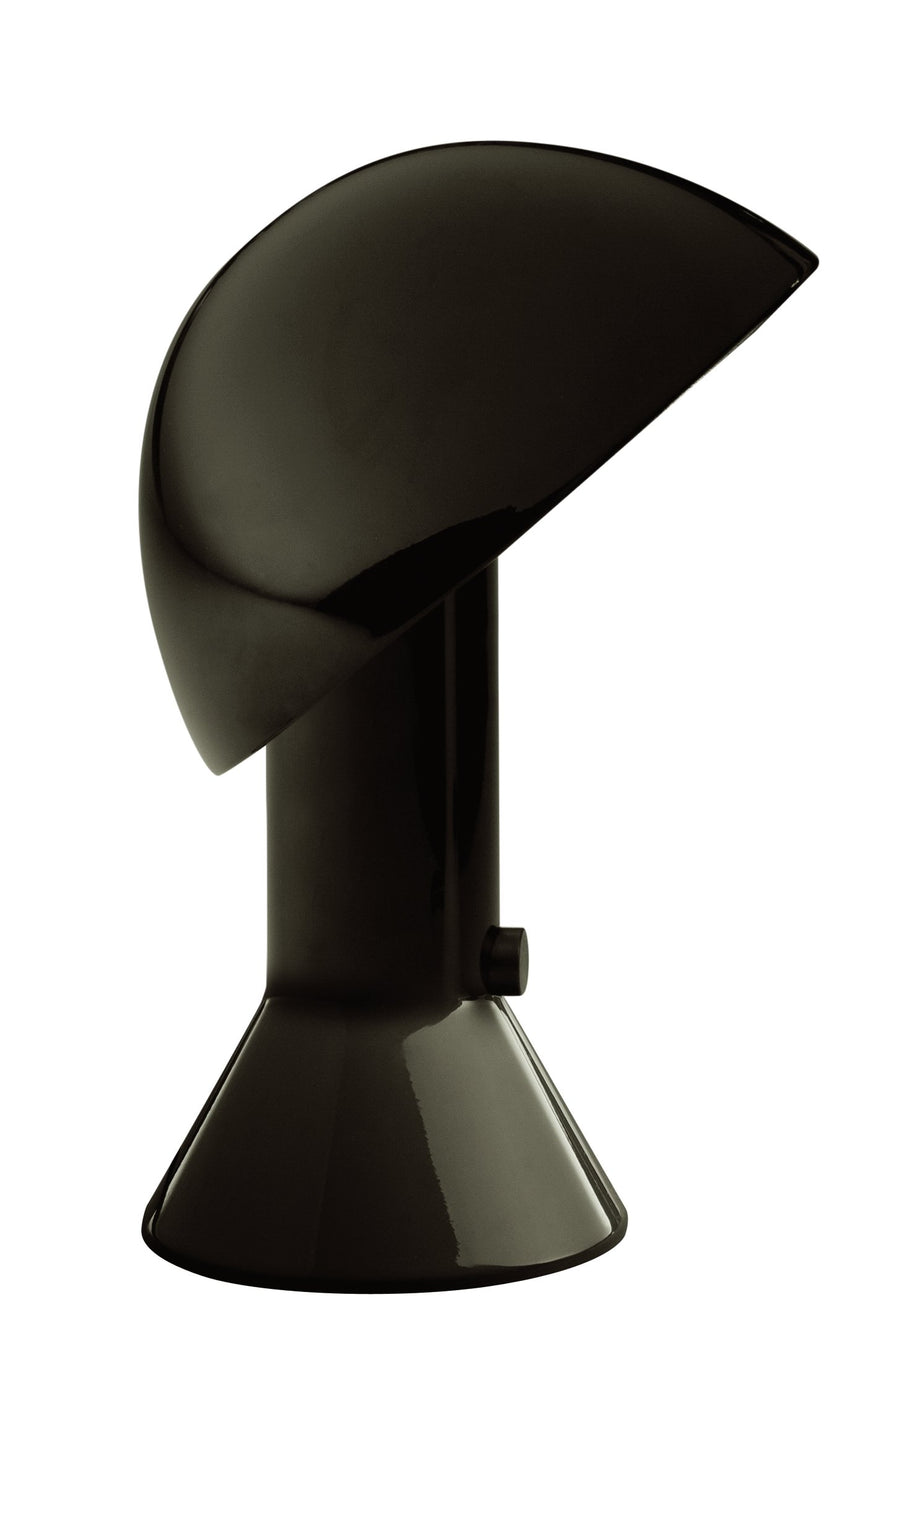 Elmetto Table Lamp in black